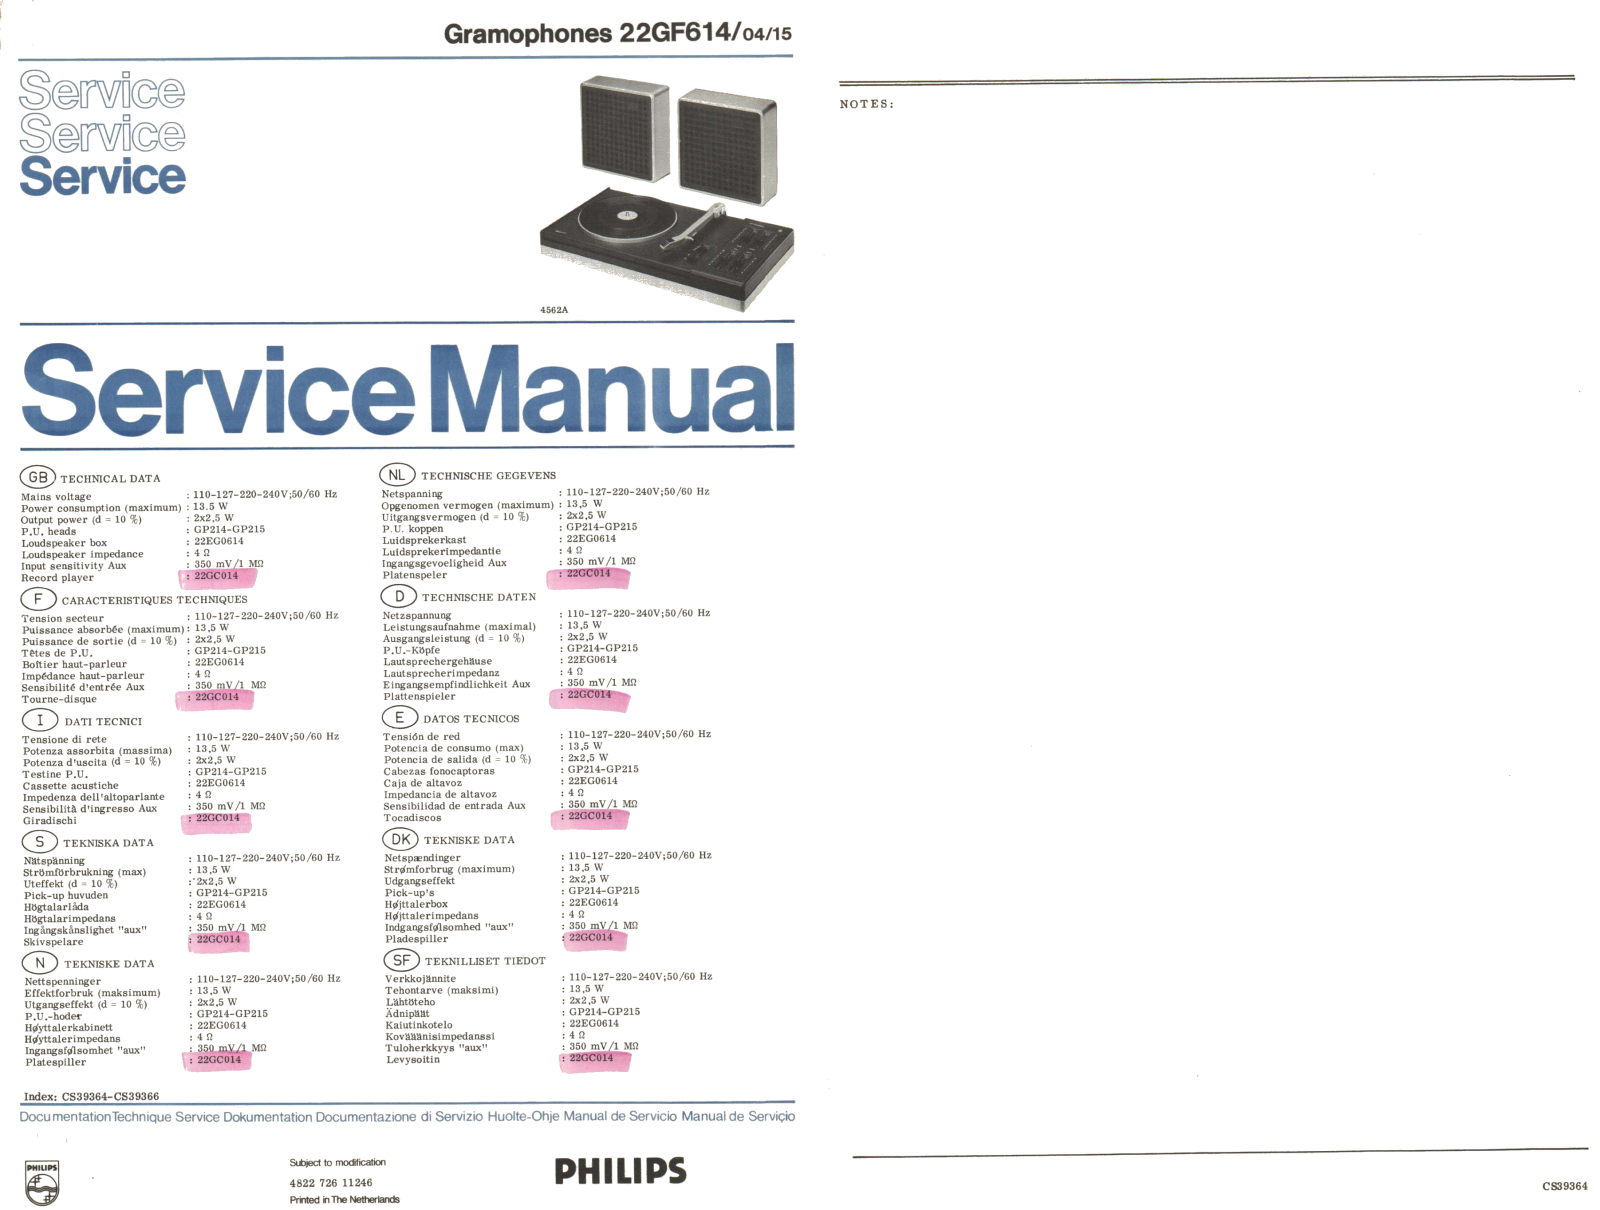 Philips 22-GF-614 Service Manual